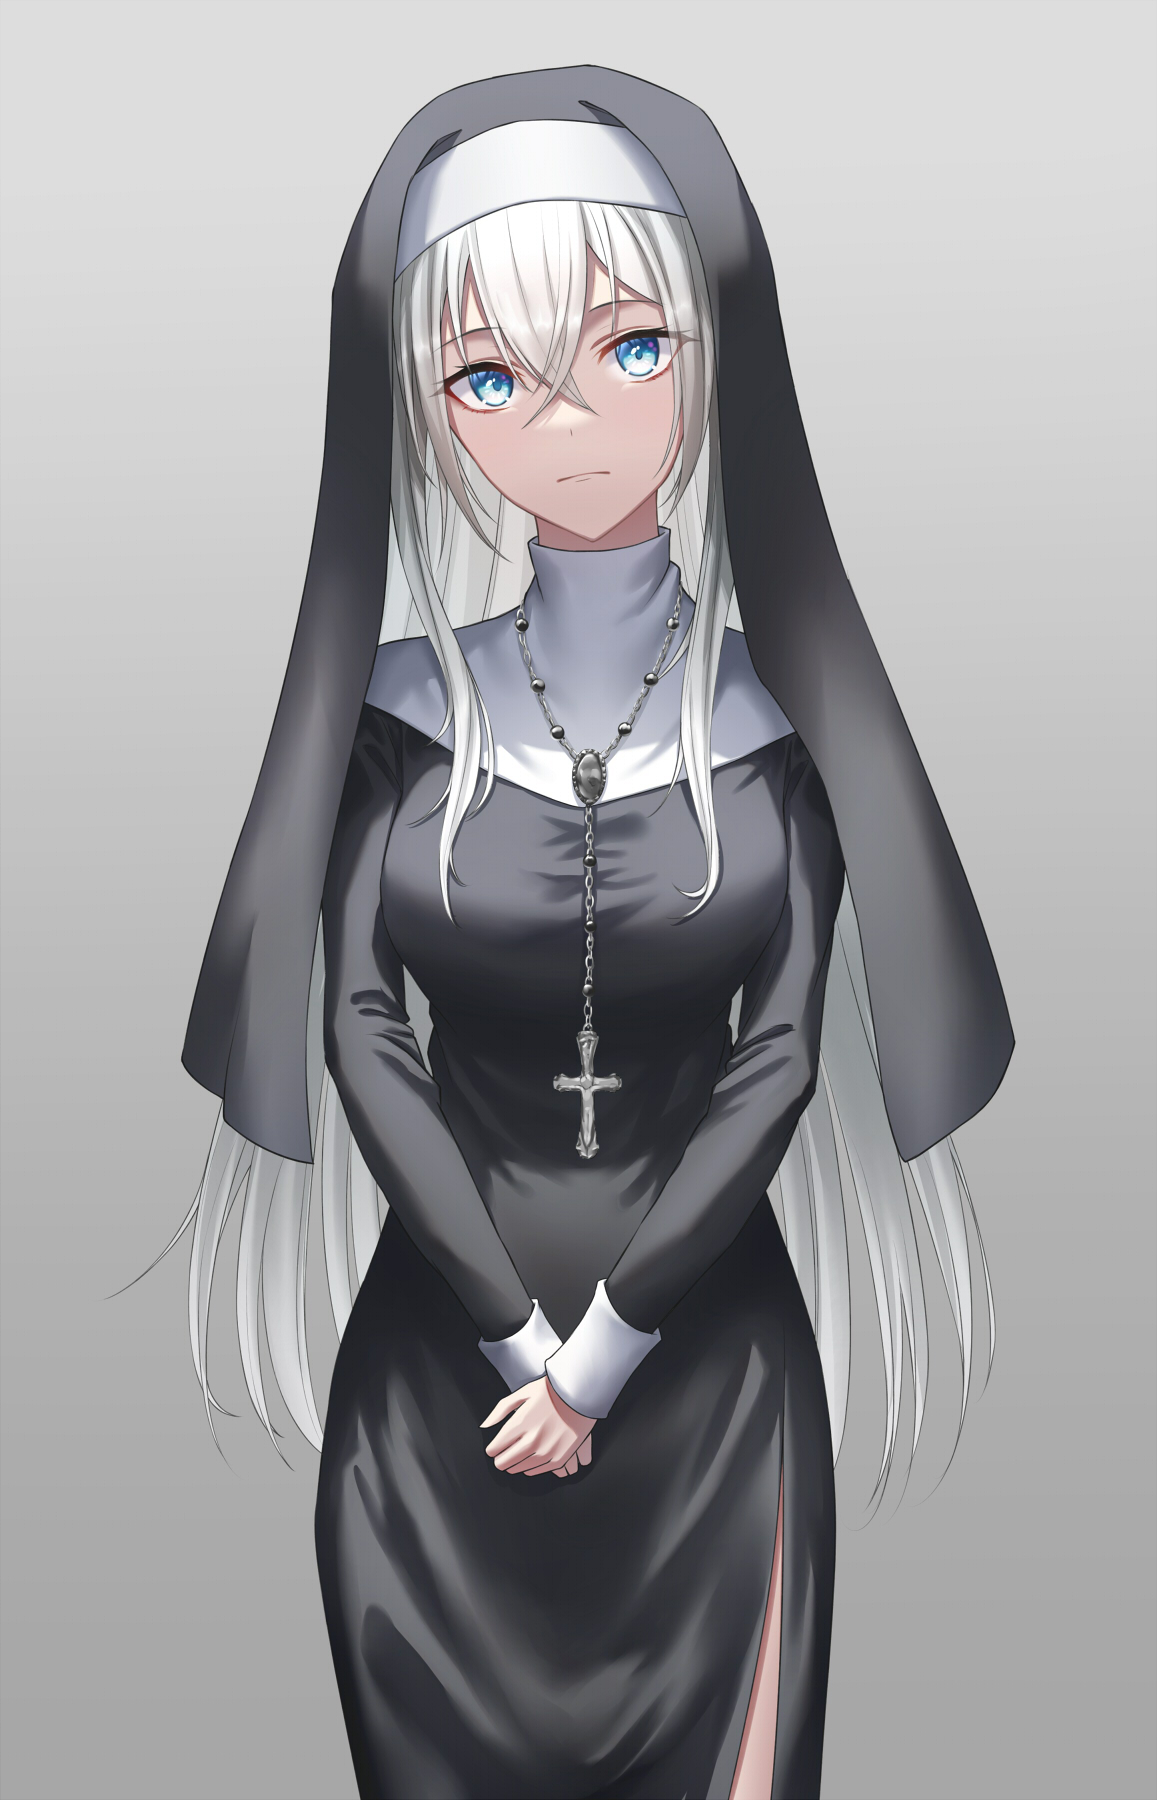 Anime 1157x1800 anime anime girls nun outfit nuns original characters artwork digital art fan art